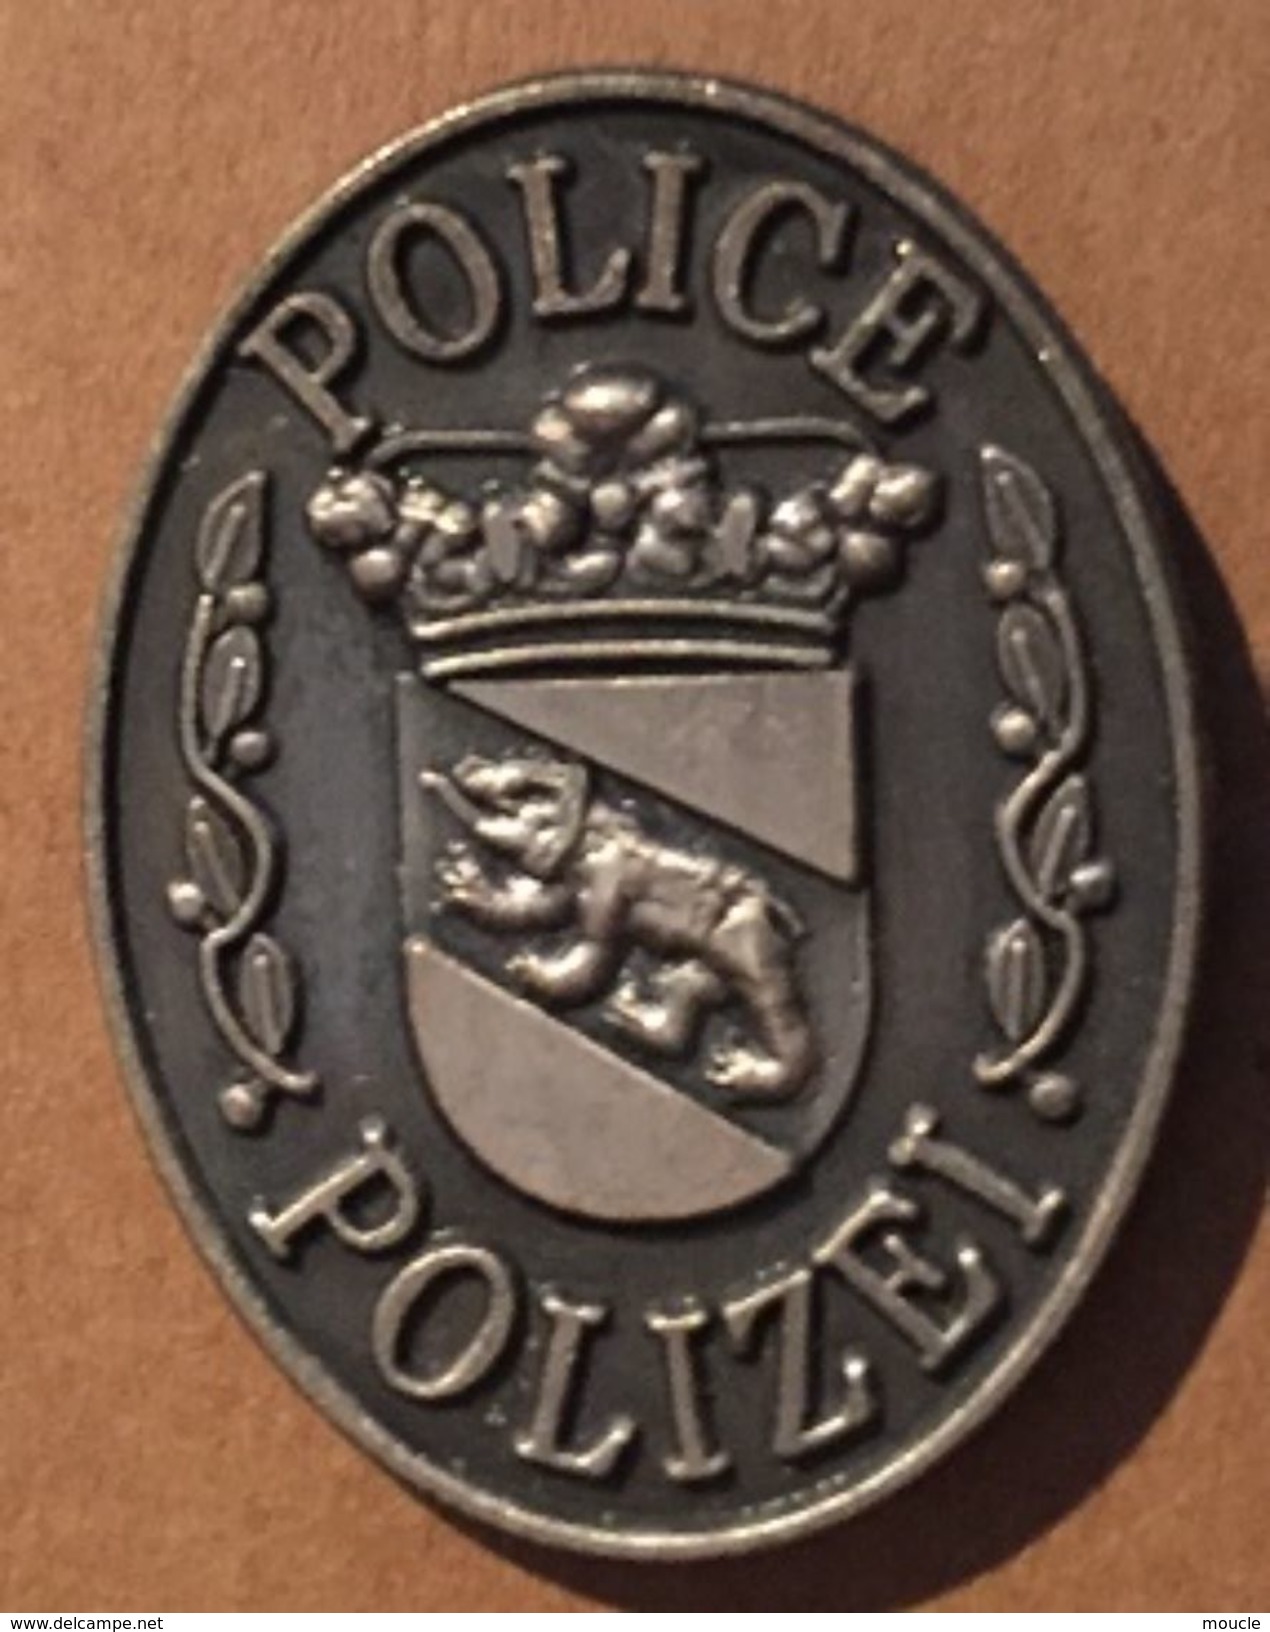 POLICE BERNOISE - BERNER POLIZEI - SUISSE - COP SWISS - SCHWEIZ - BERNE - BERN - OURS - BÄR   -     (19) - Polizia